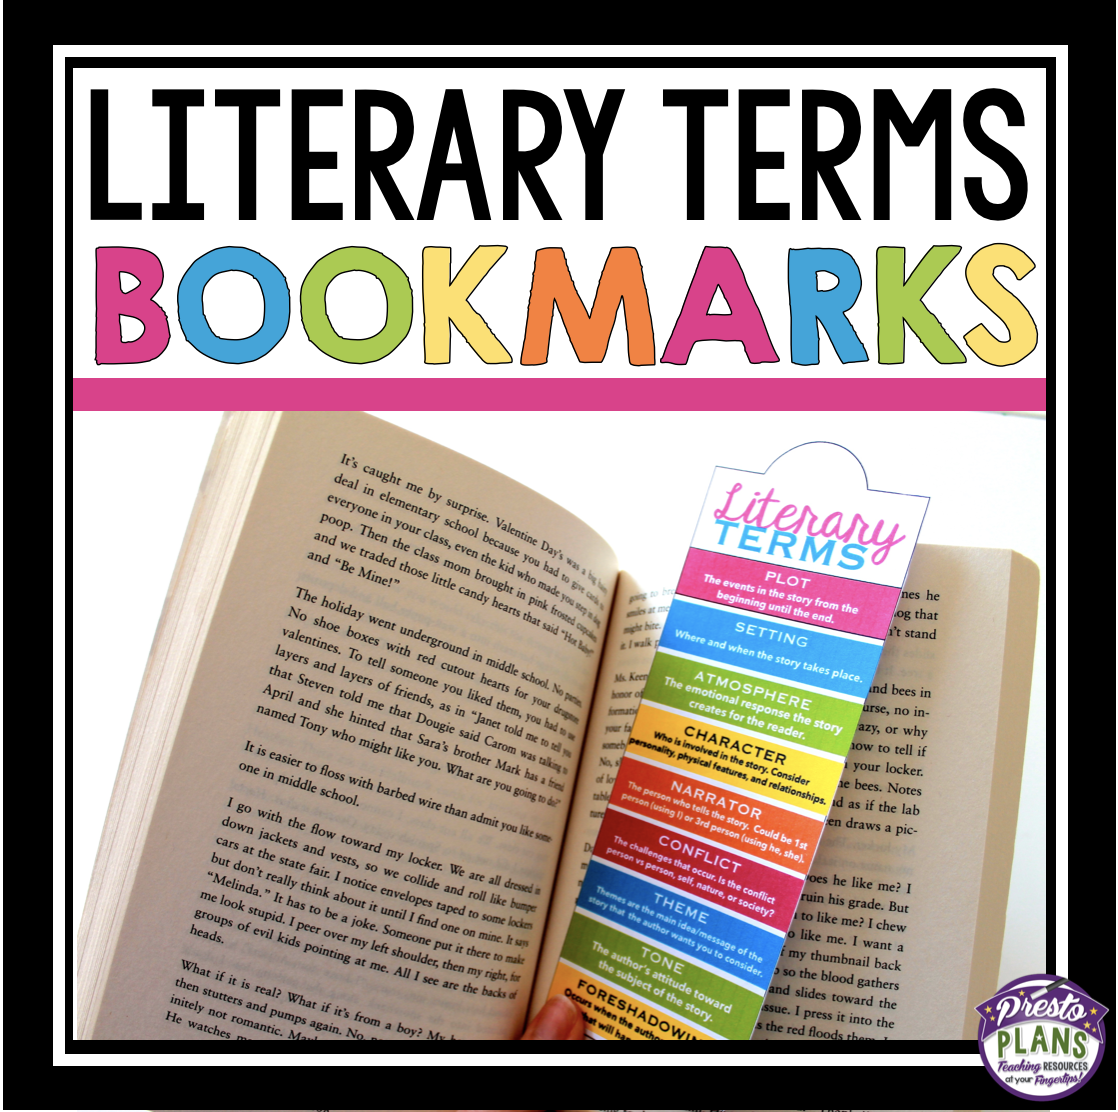 Literary Term Bookmarks